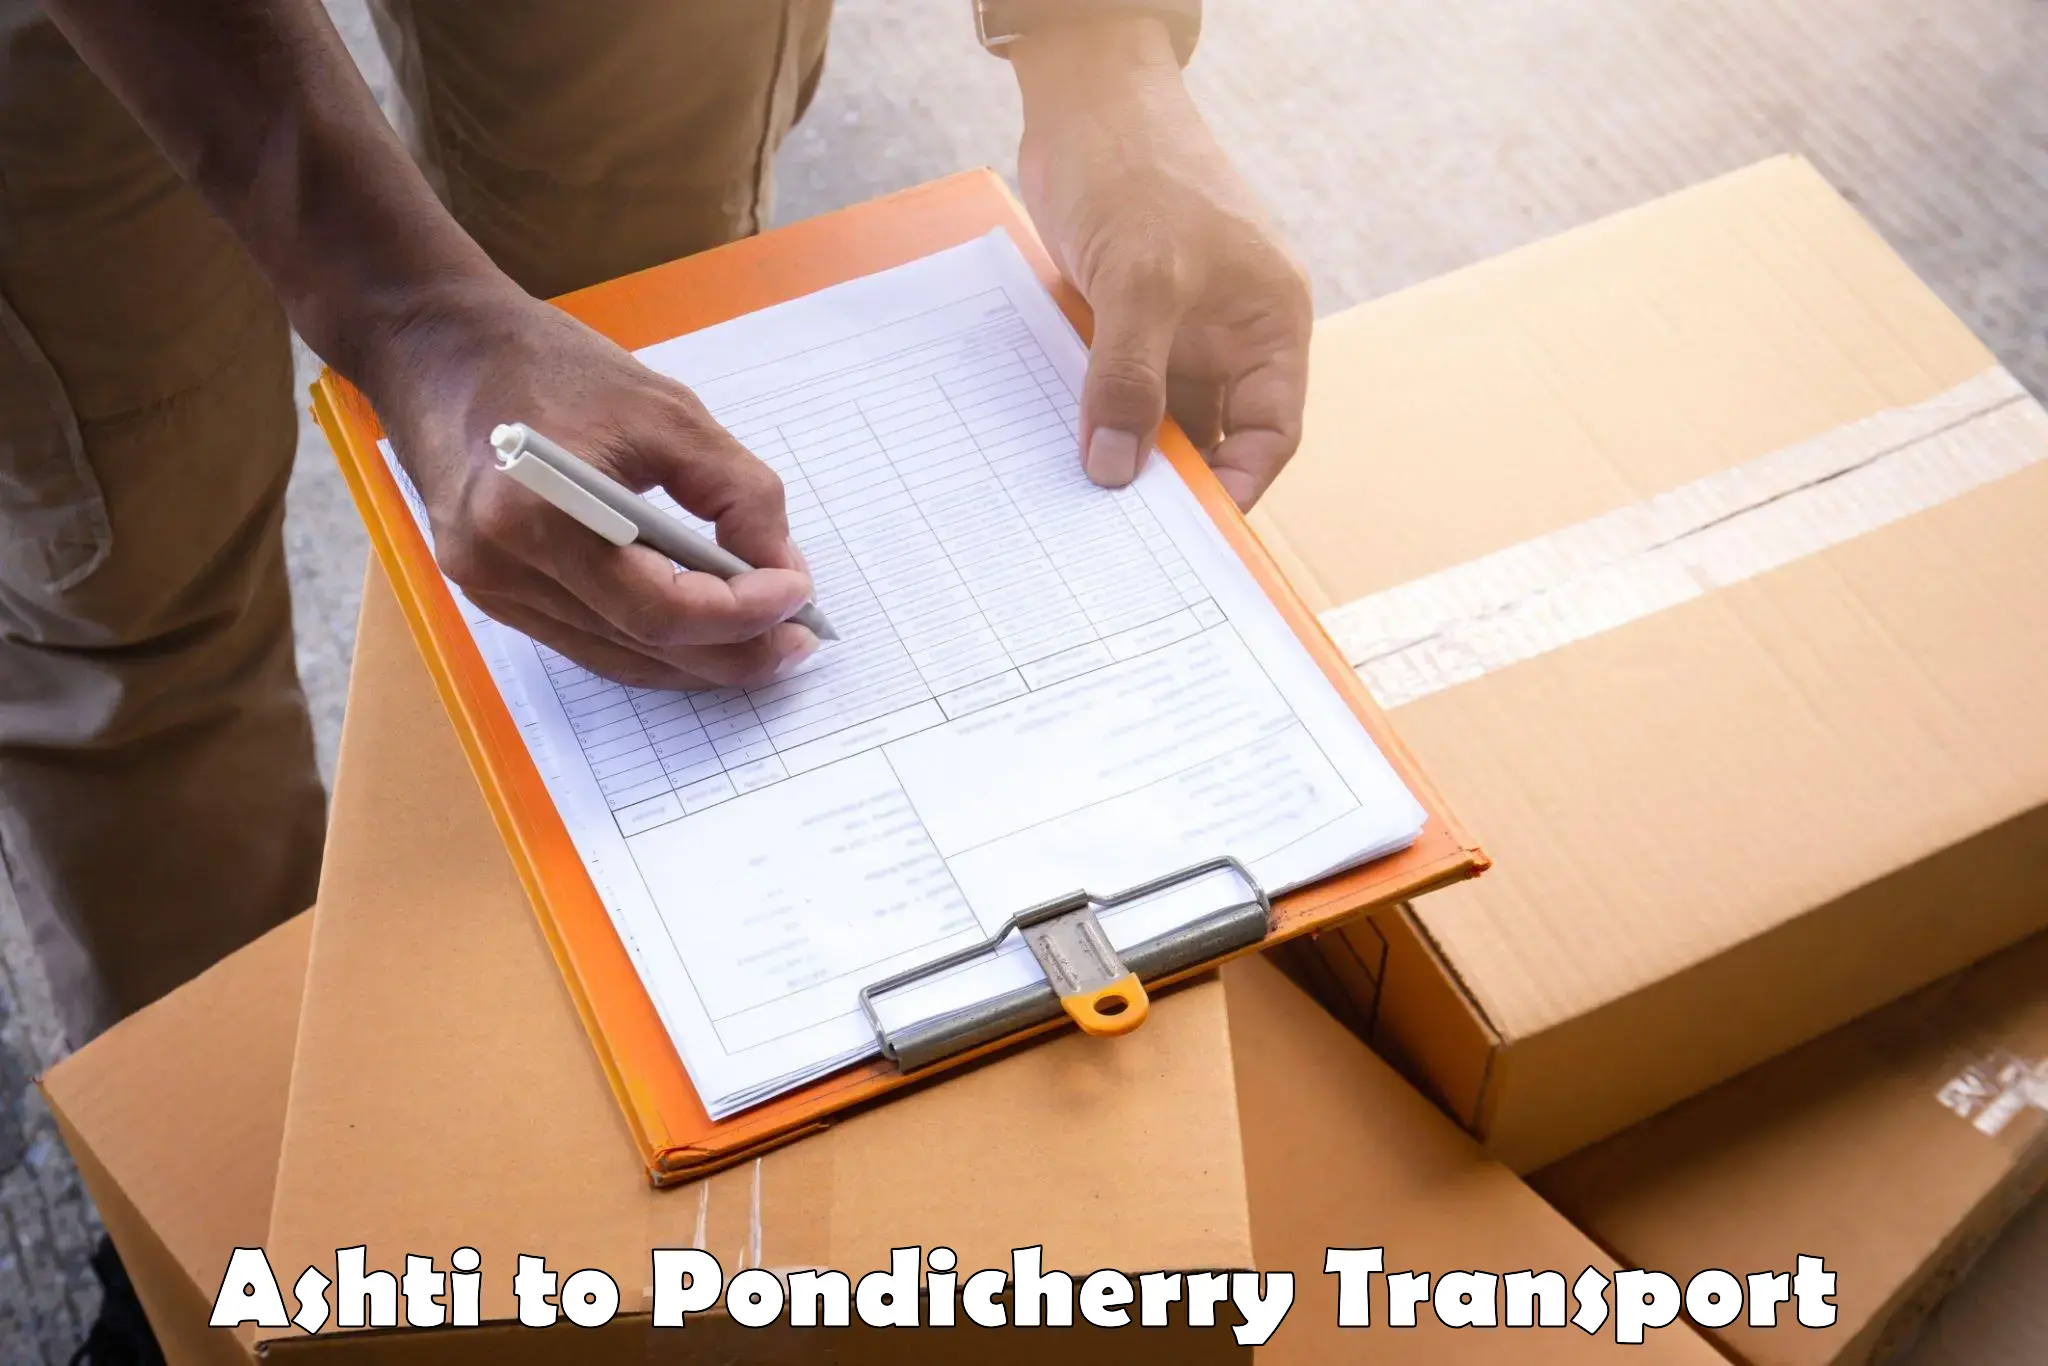 Transport in sharing Ashti to Pondicherry